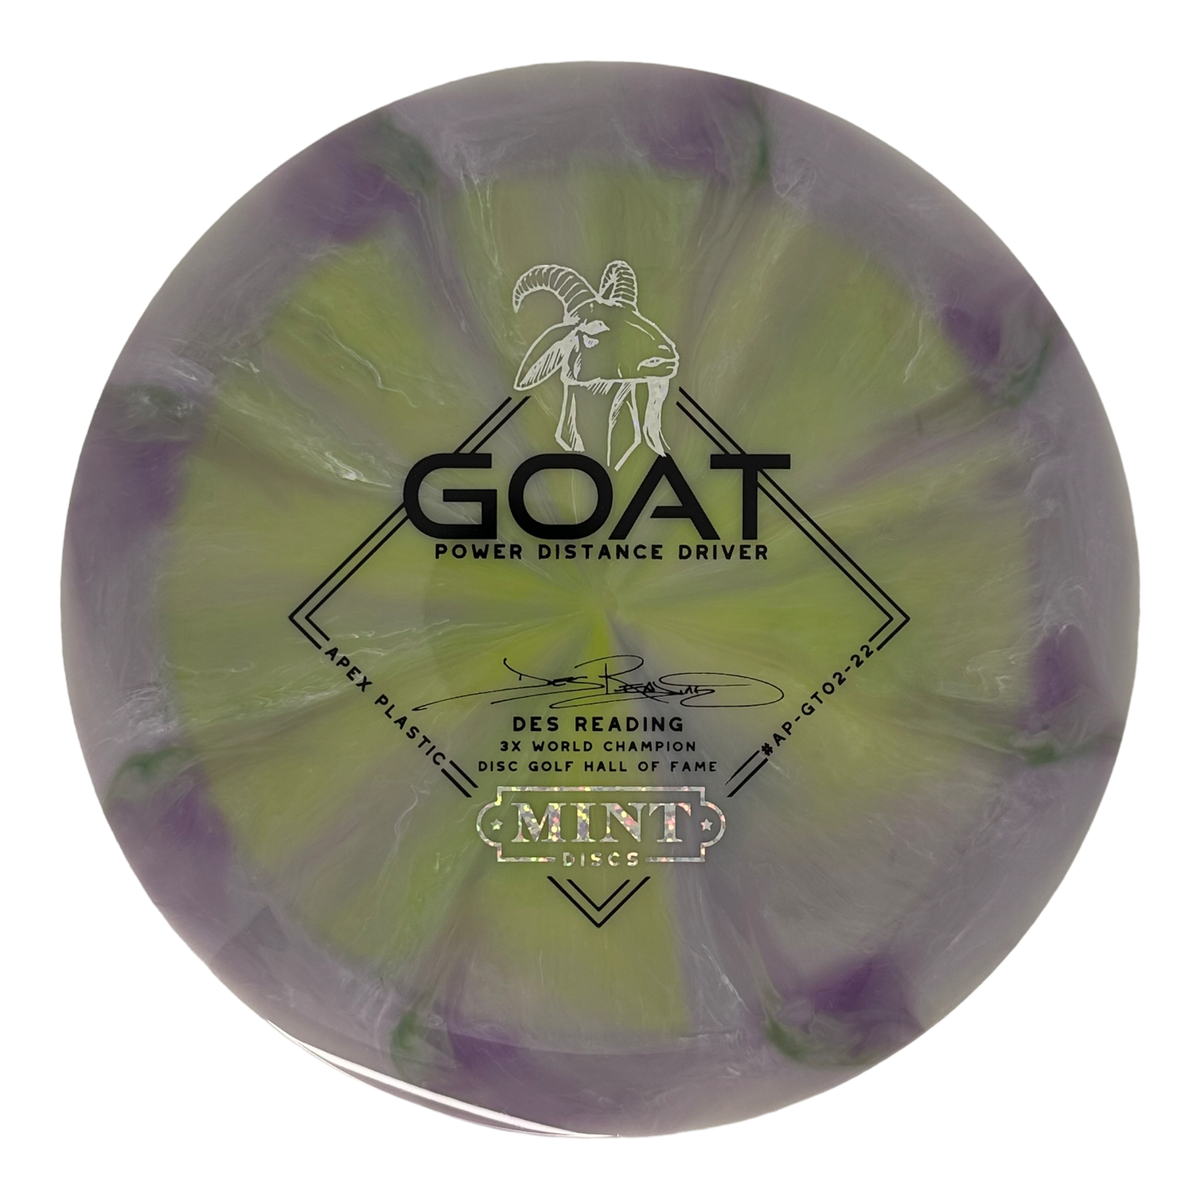 Mint Discs Swirly Apex Goat - Des Reading Signature Series